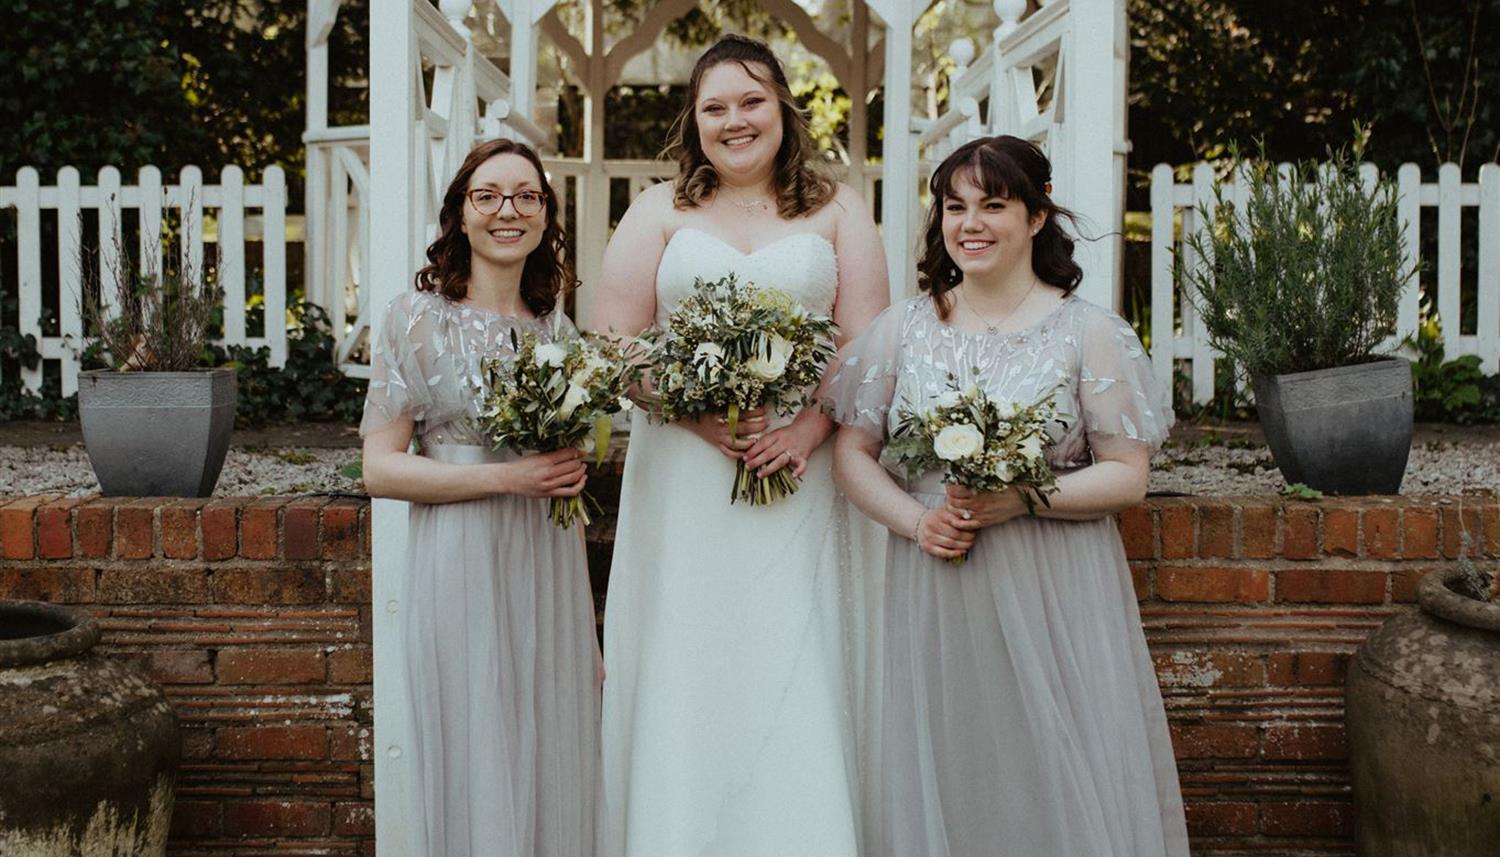 Bride with bridesmaids. Photo Credit: E&O Photography